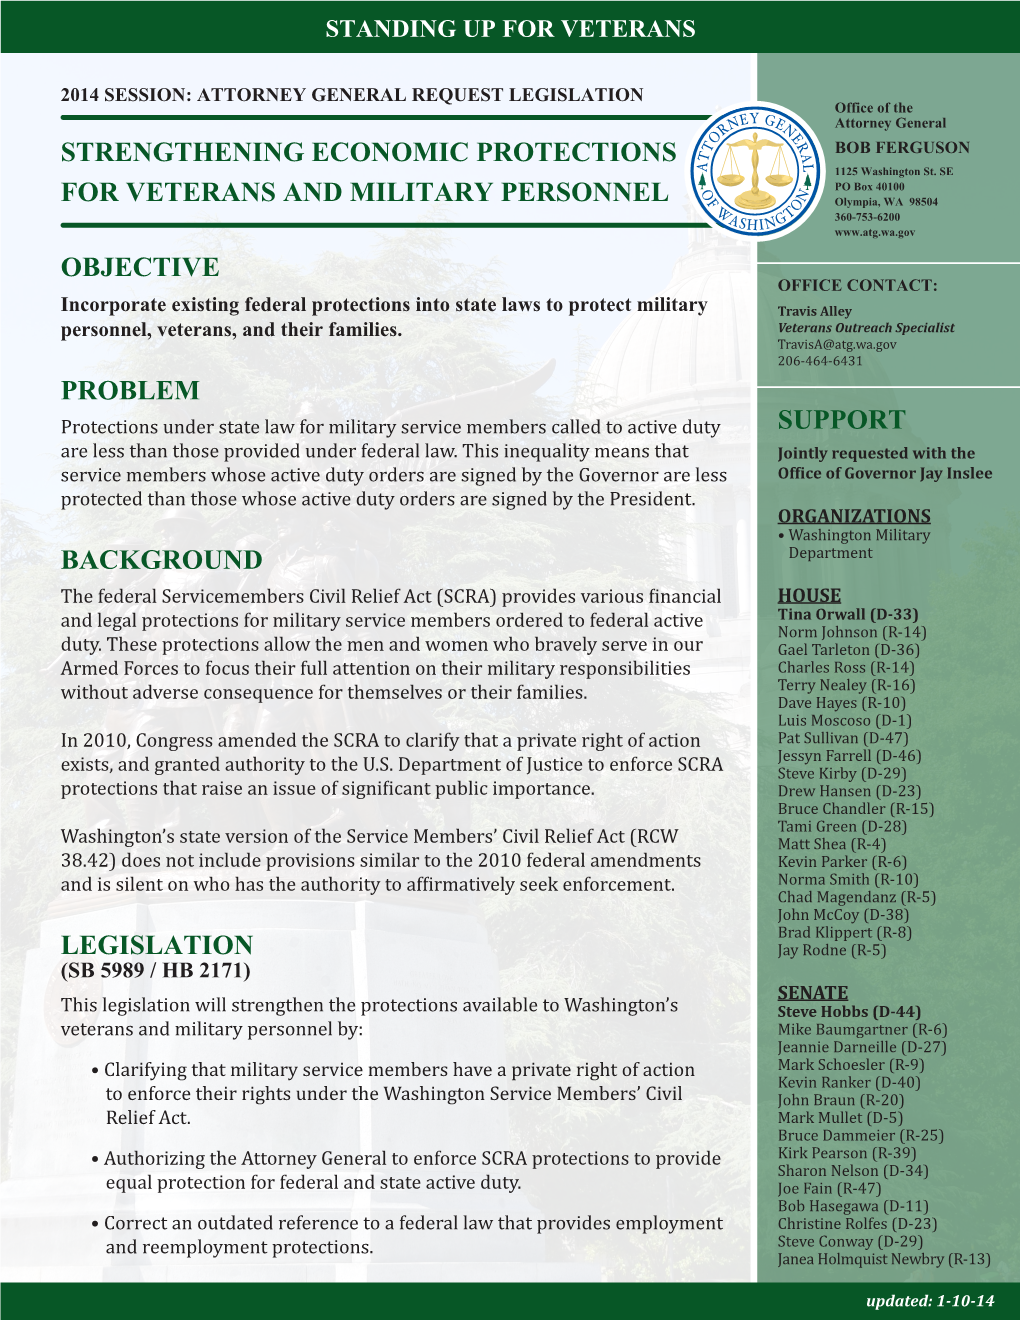 Strengthening Economic Protections for Veterans